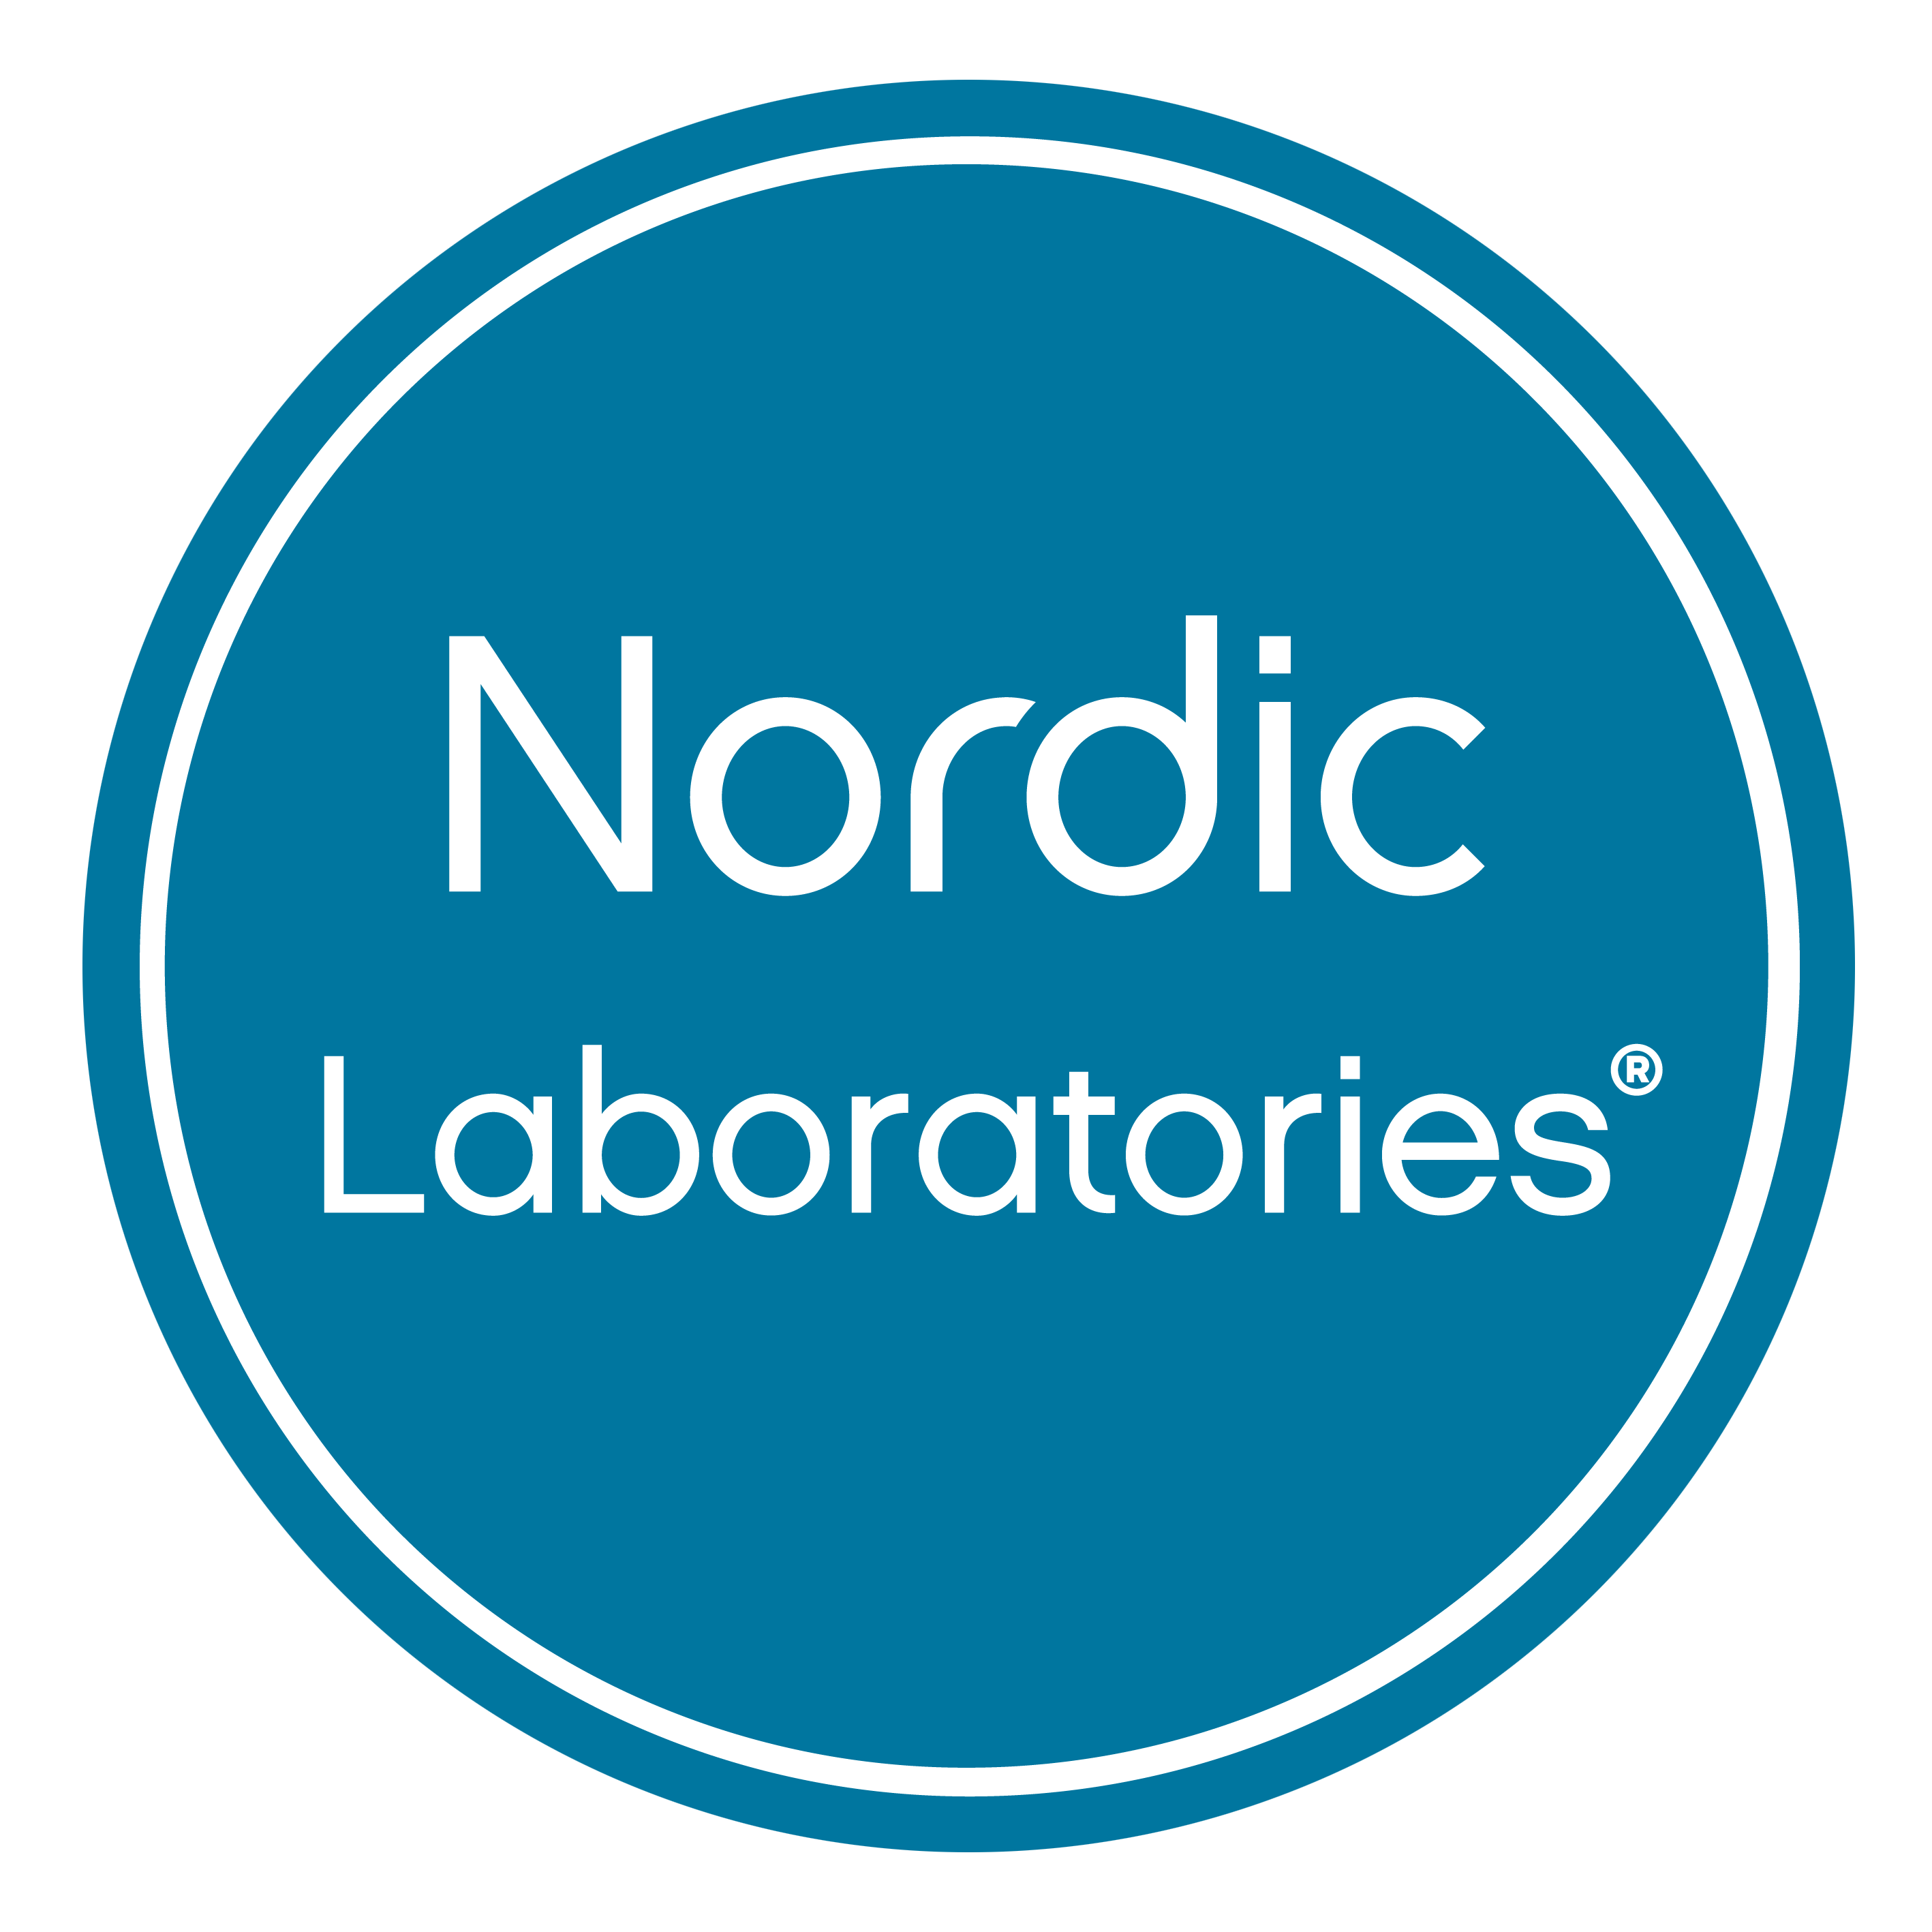 Nordic Laboratories logo, funktionaaliset laboratoriotestit.